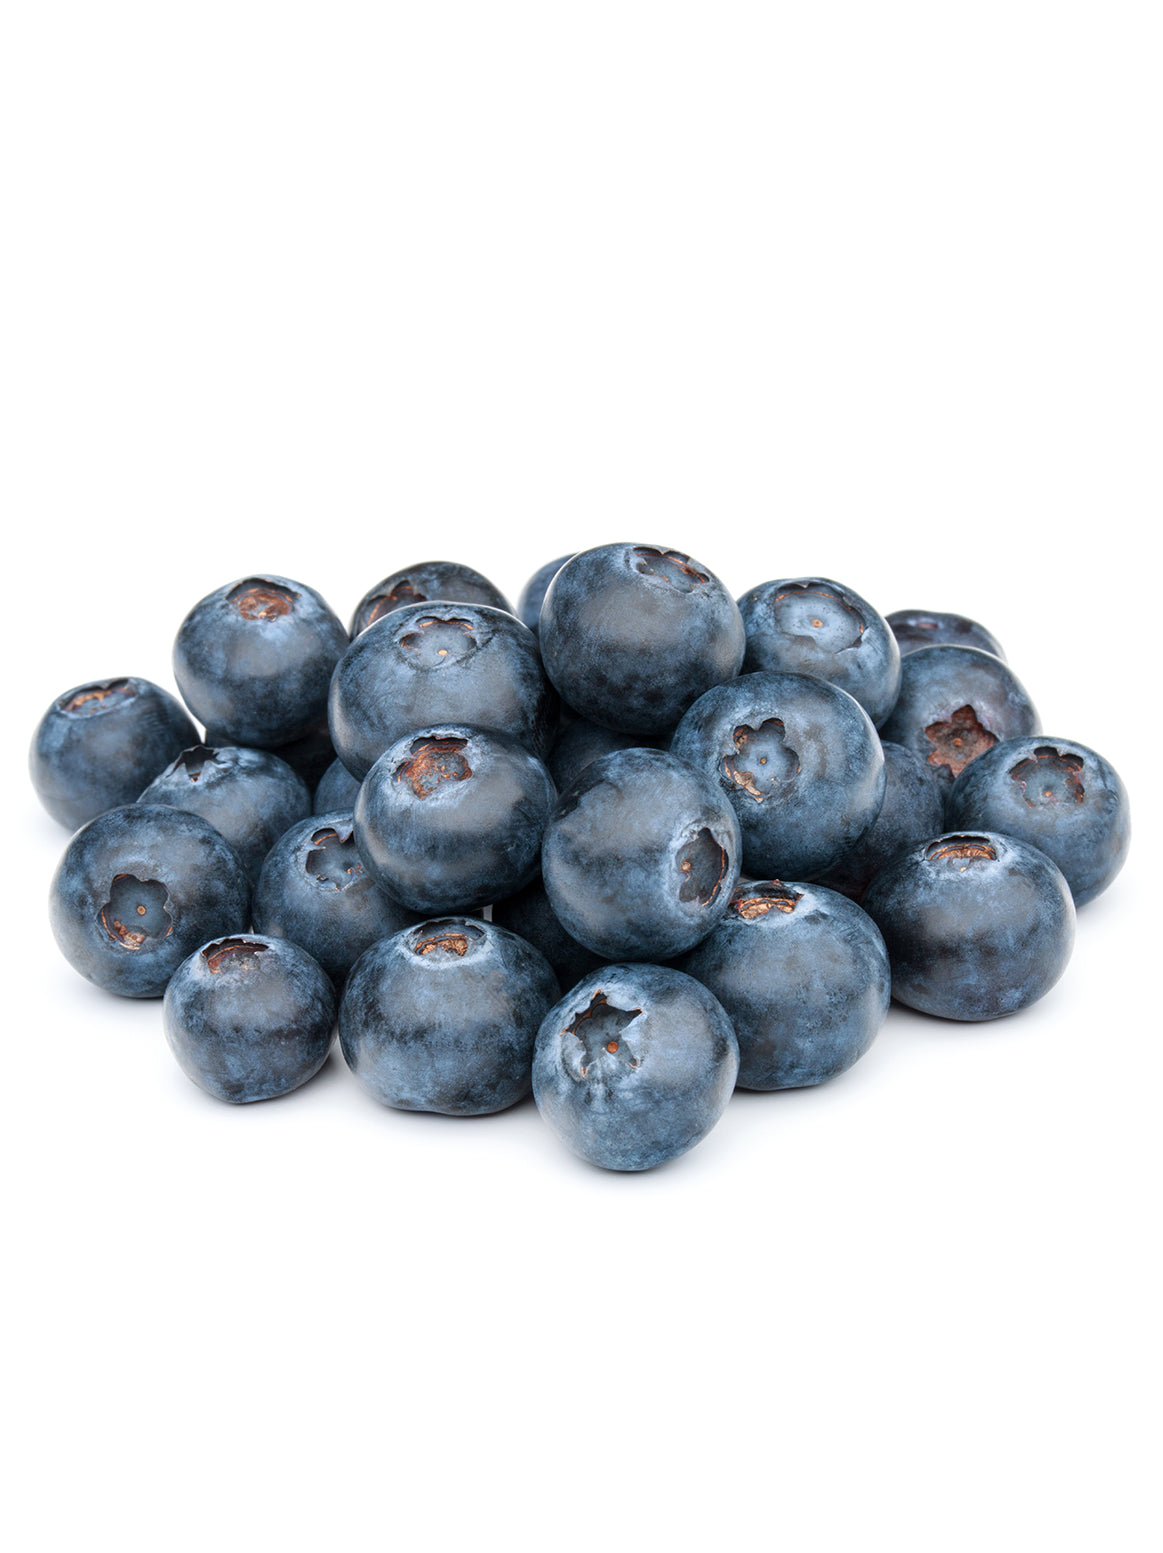 Organic Blueberries - 1/2 Pint